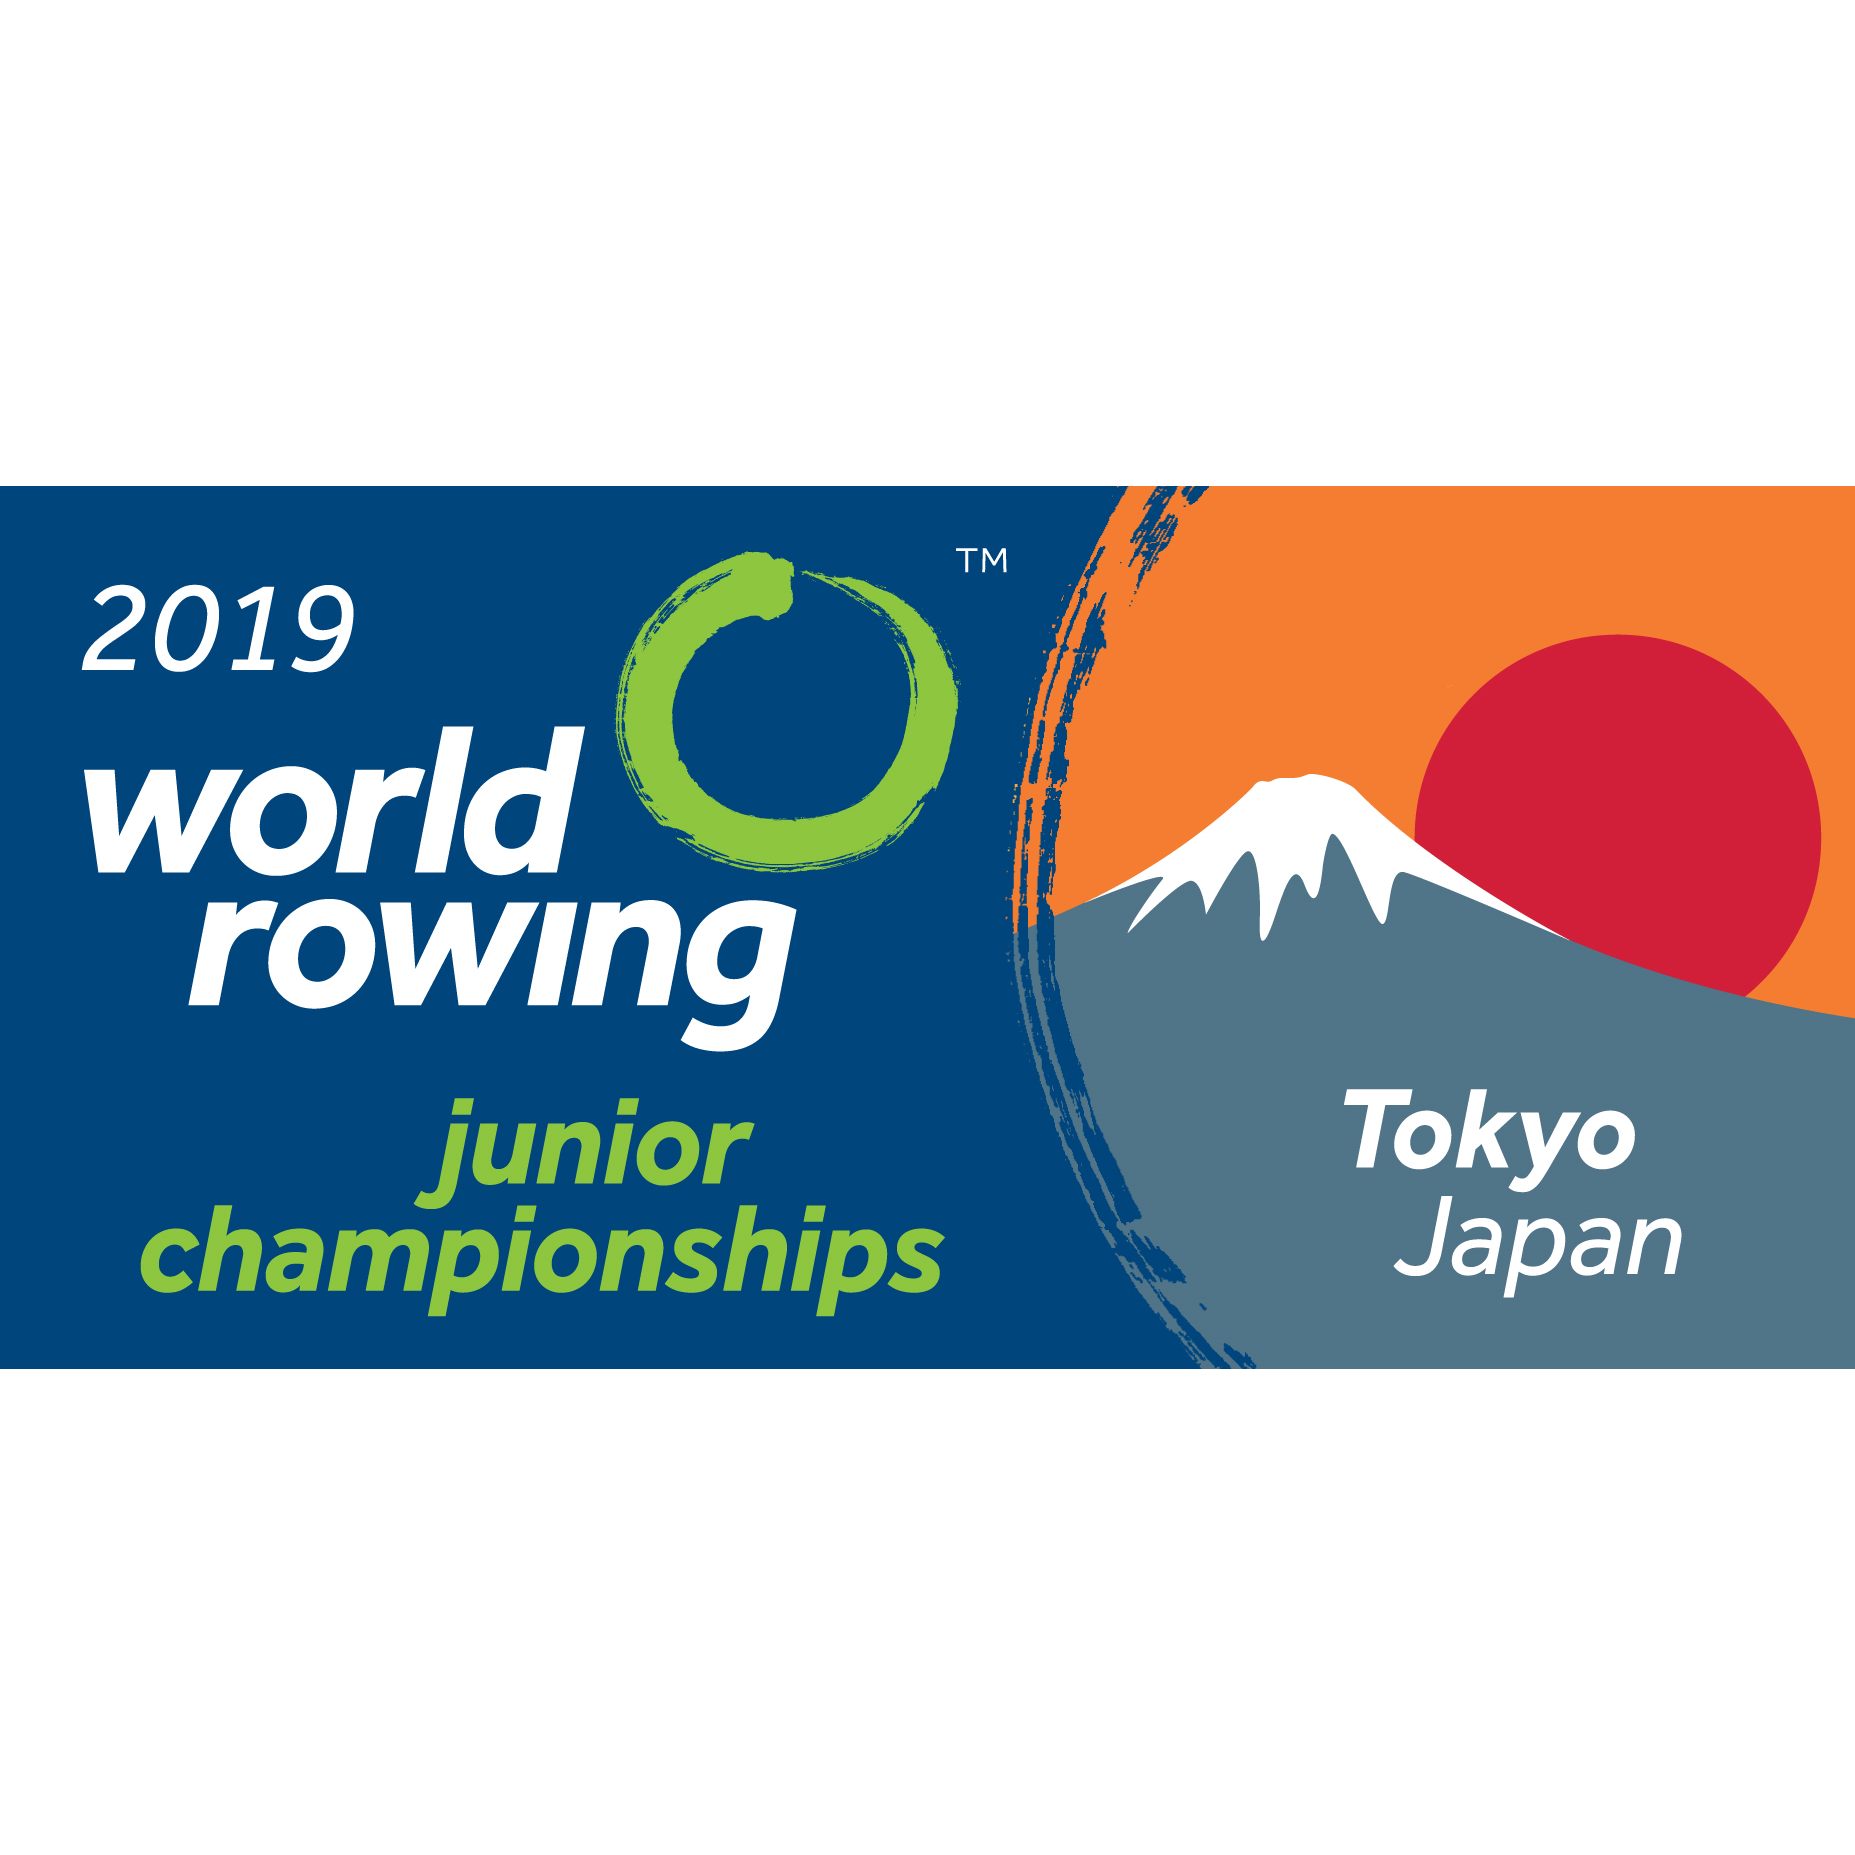 2019 World Rowing U19 Championships